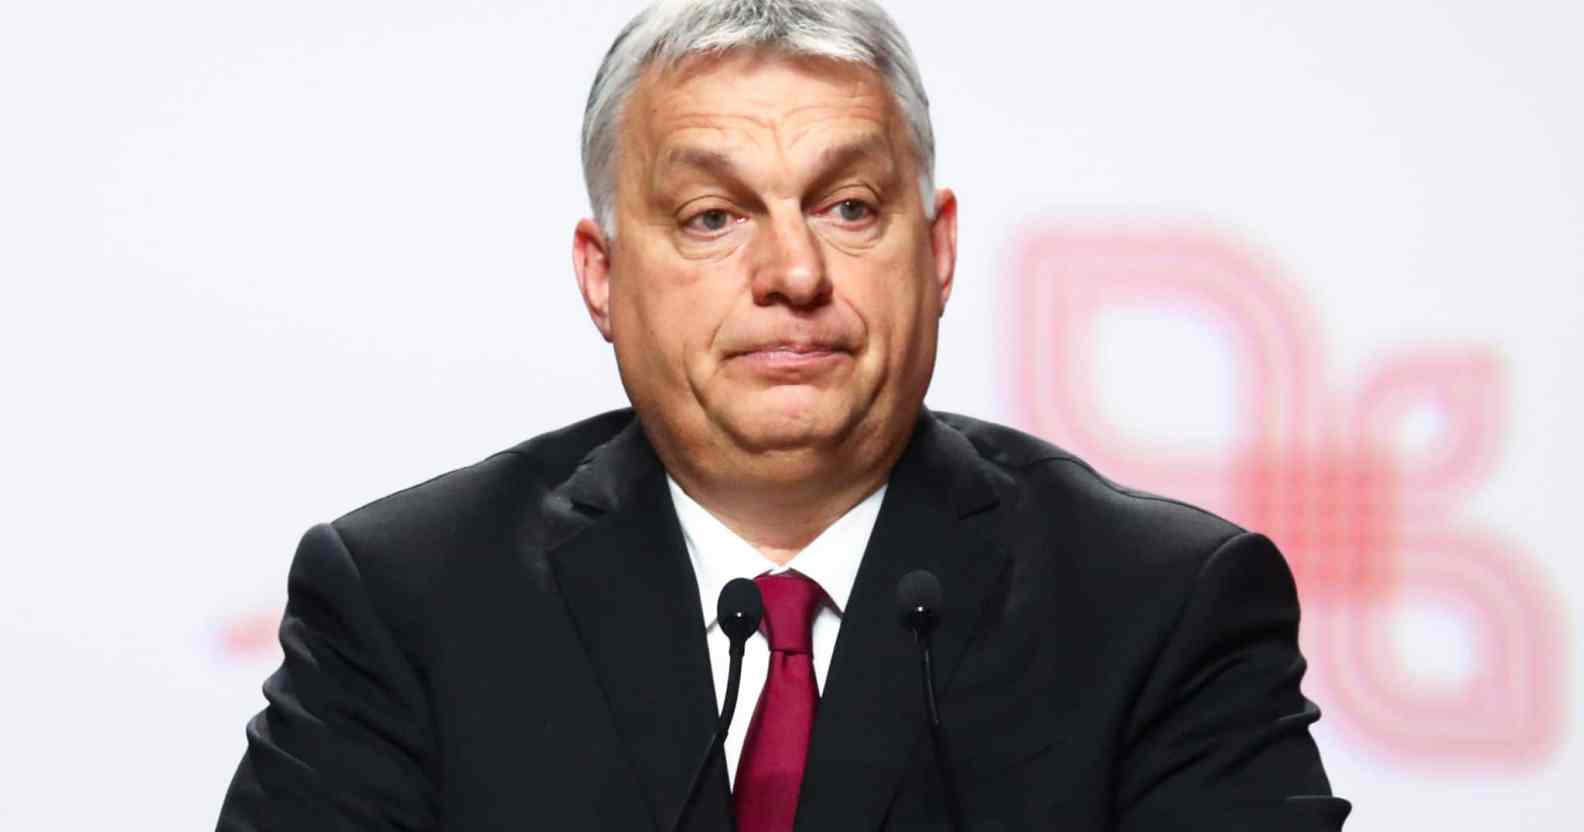 anti-LGBT+ prime minister of Hungary Viktor Orbán